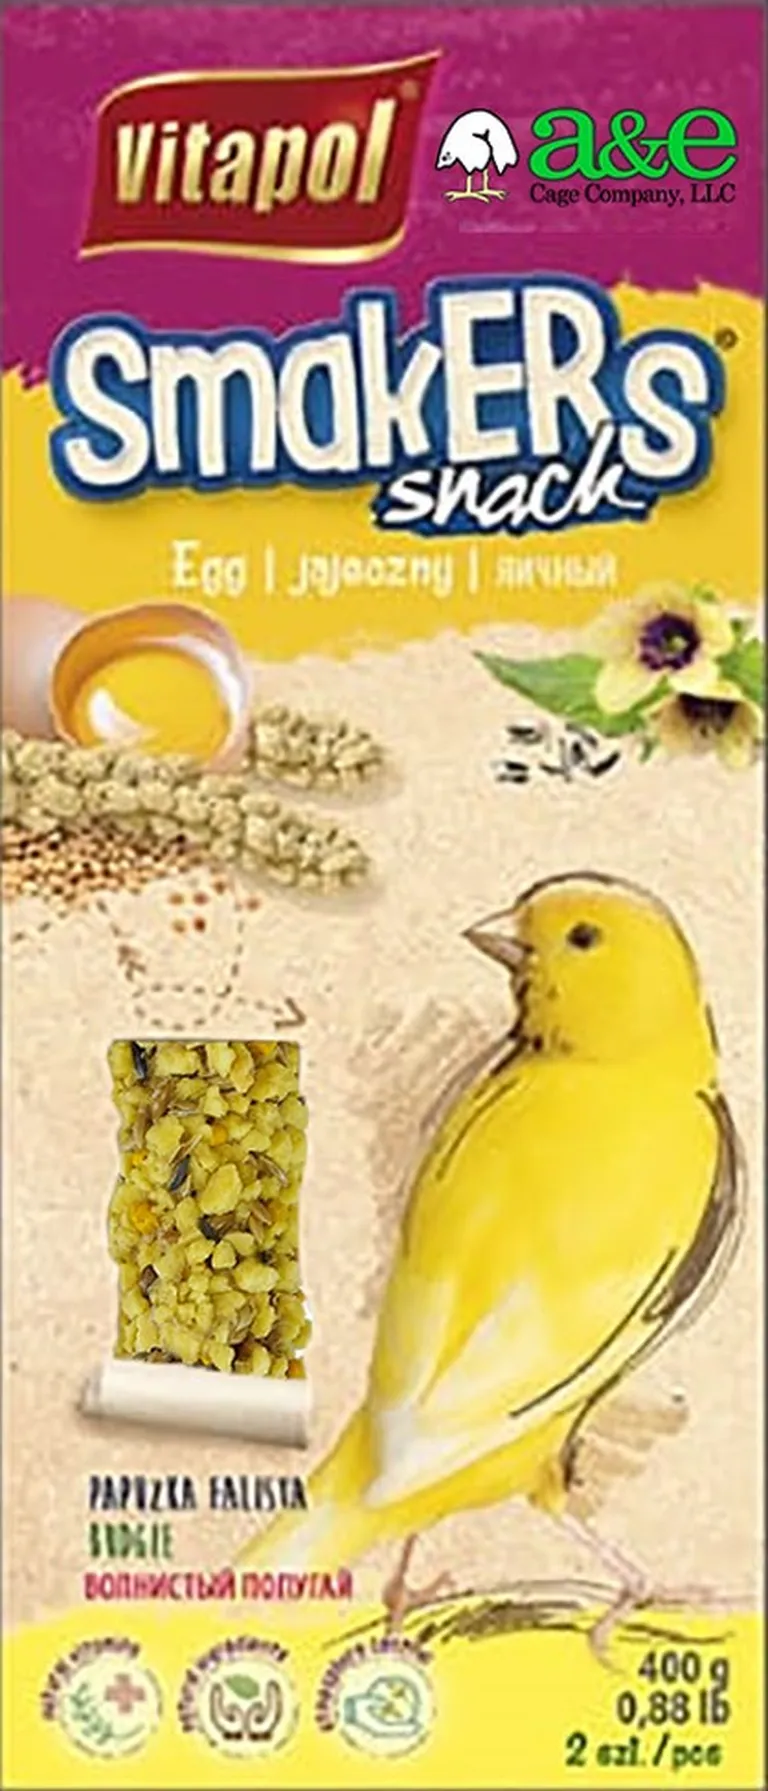 AE Cage Company Smakers Canary Egg Treat Sticks Photo 1